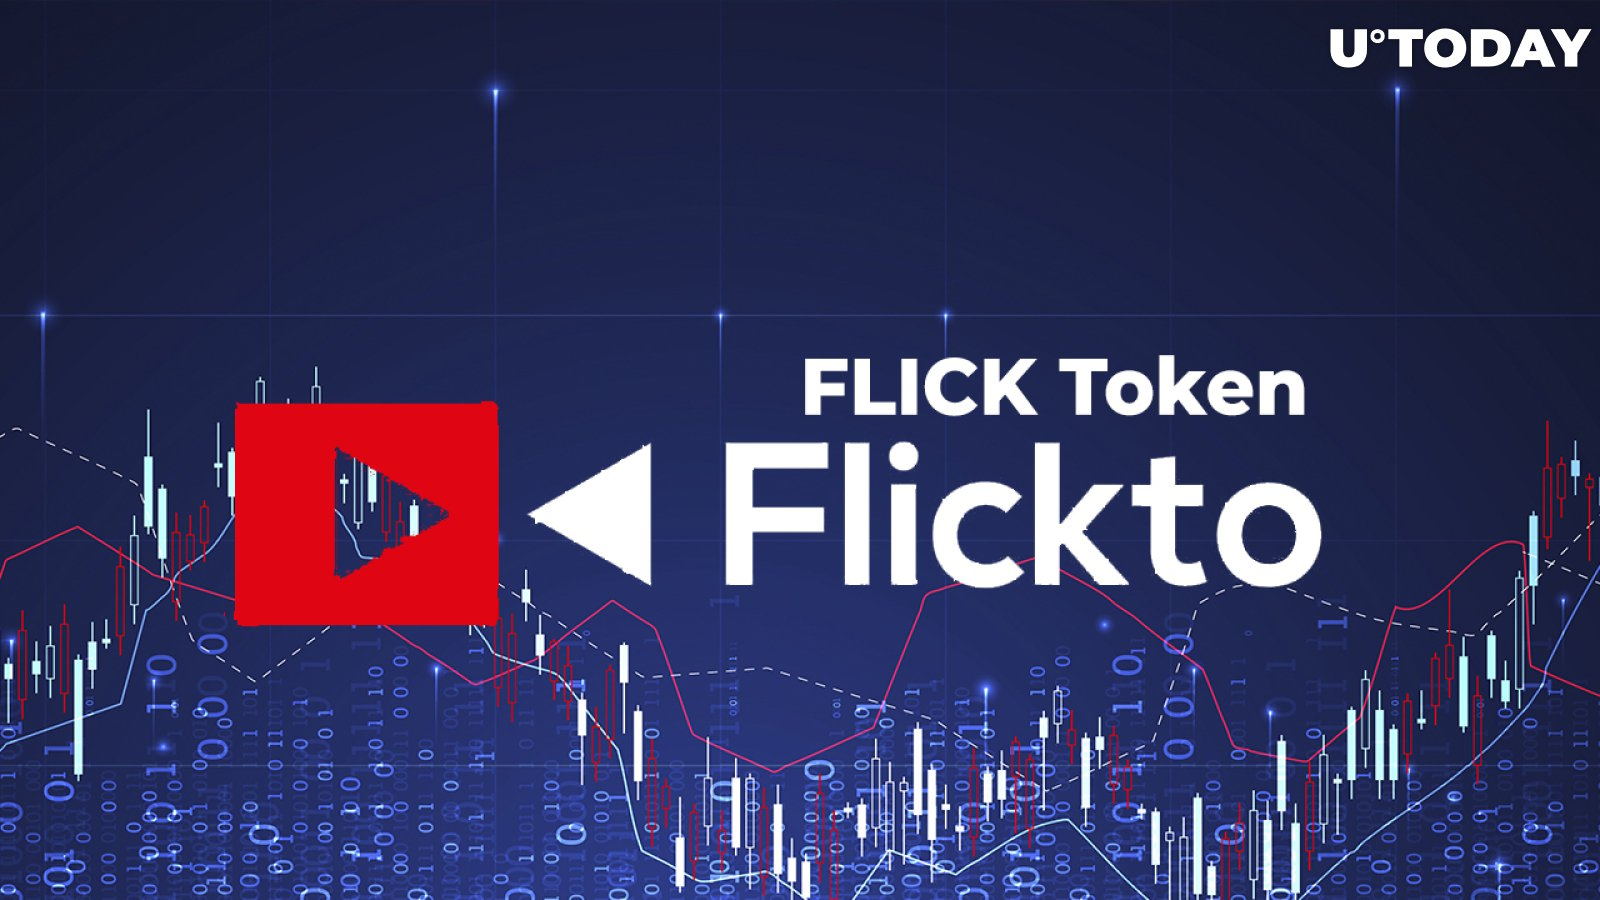 Cardano-based Flickto Adds Its FLICK Token to ADAX Exchange